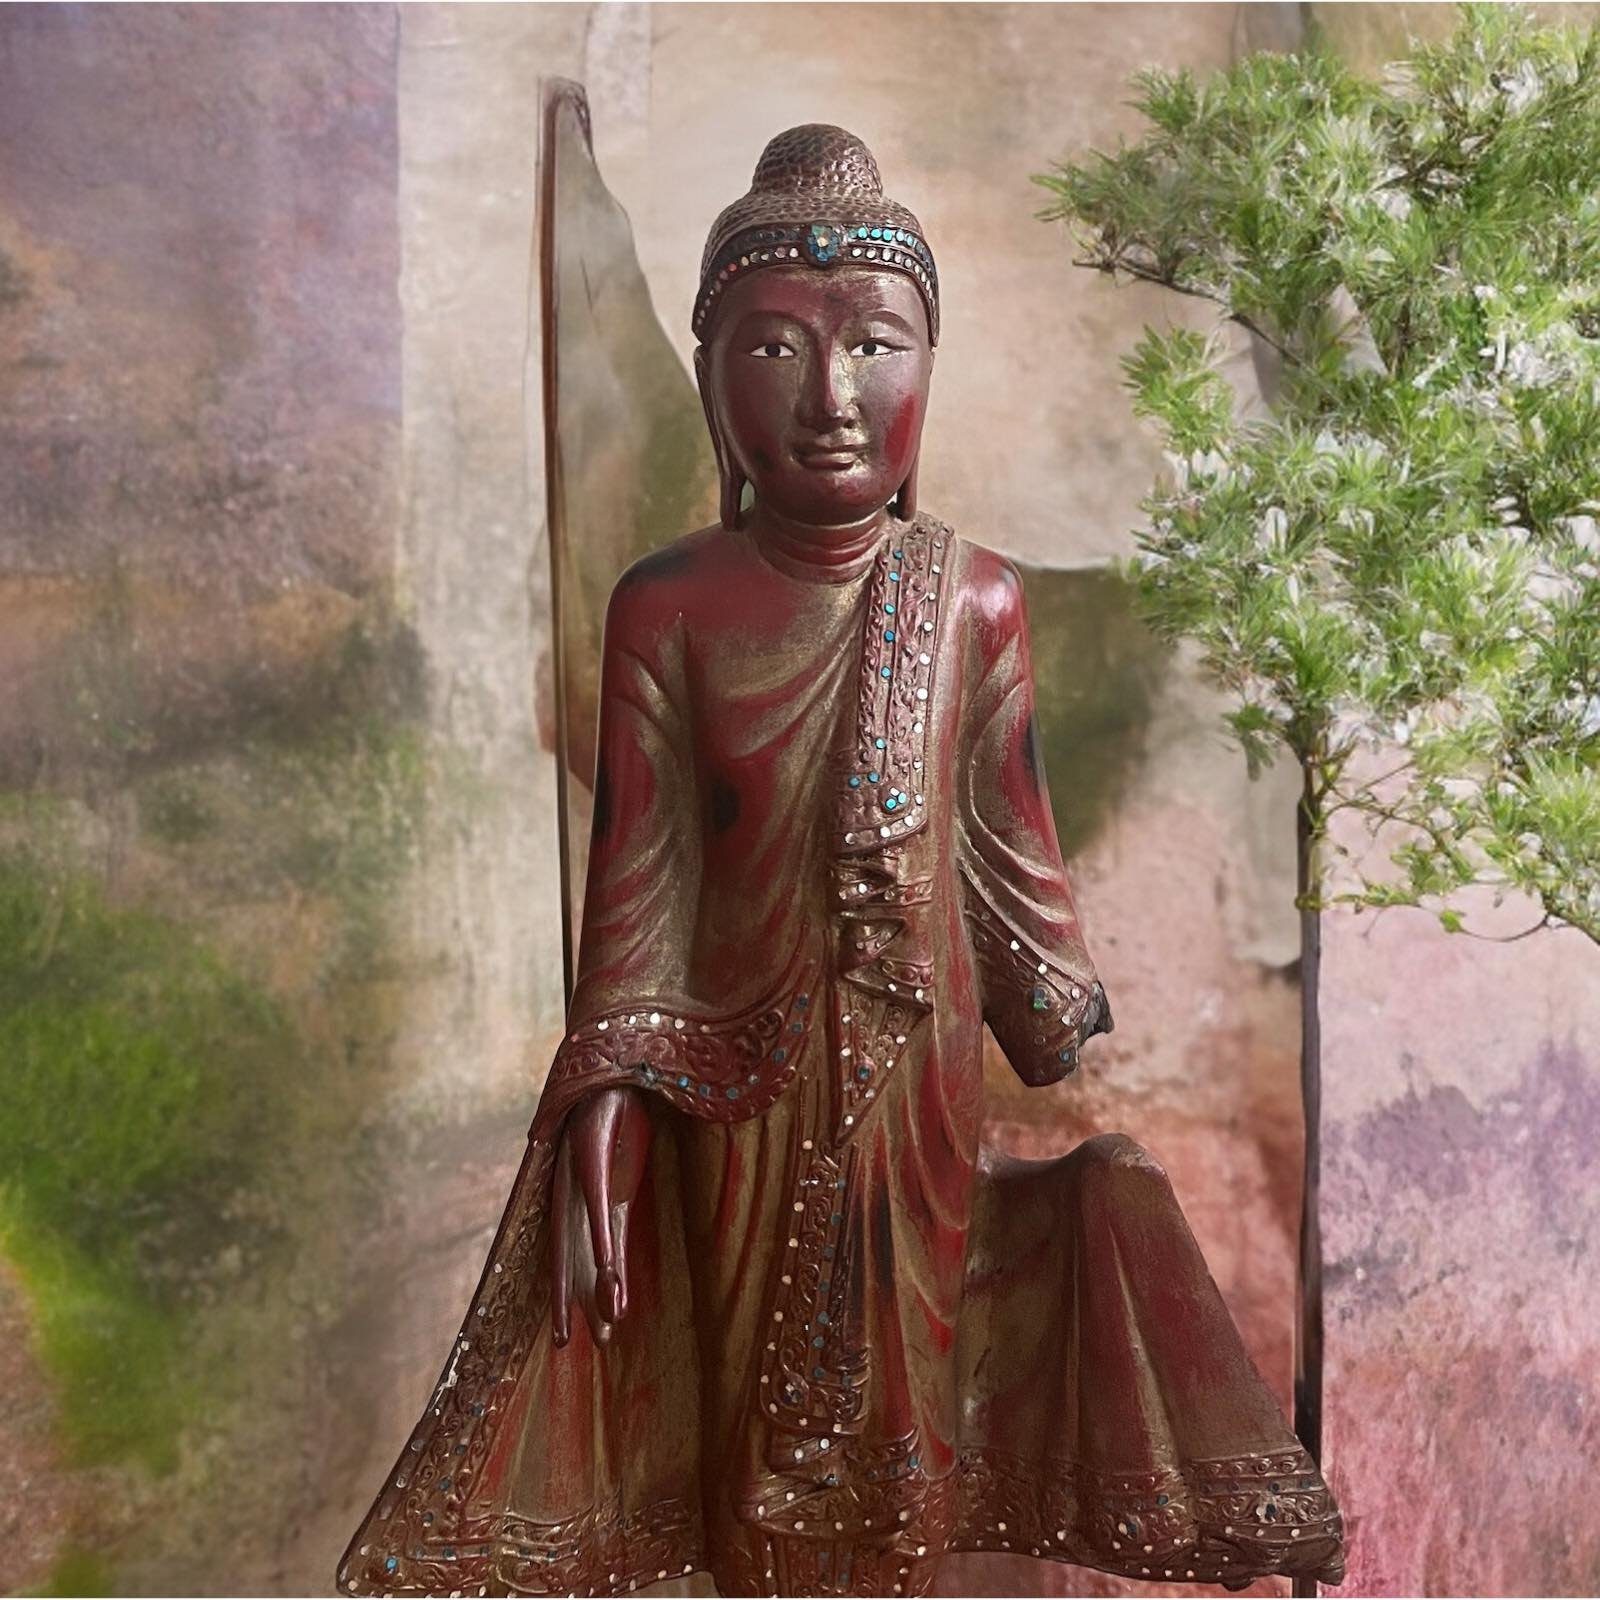 Asien LifeStyle Buddhafigur Holz Buddha Figur Rot - Burma, Thailand stehend 